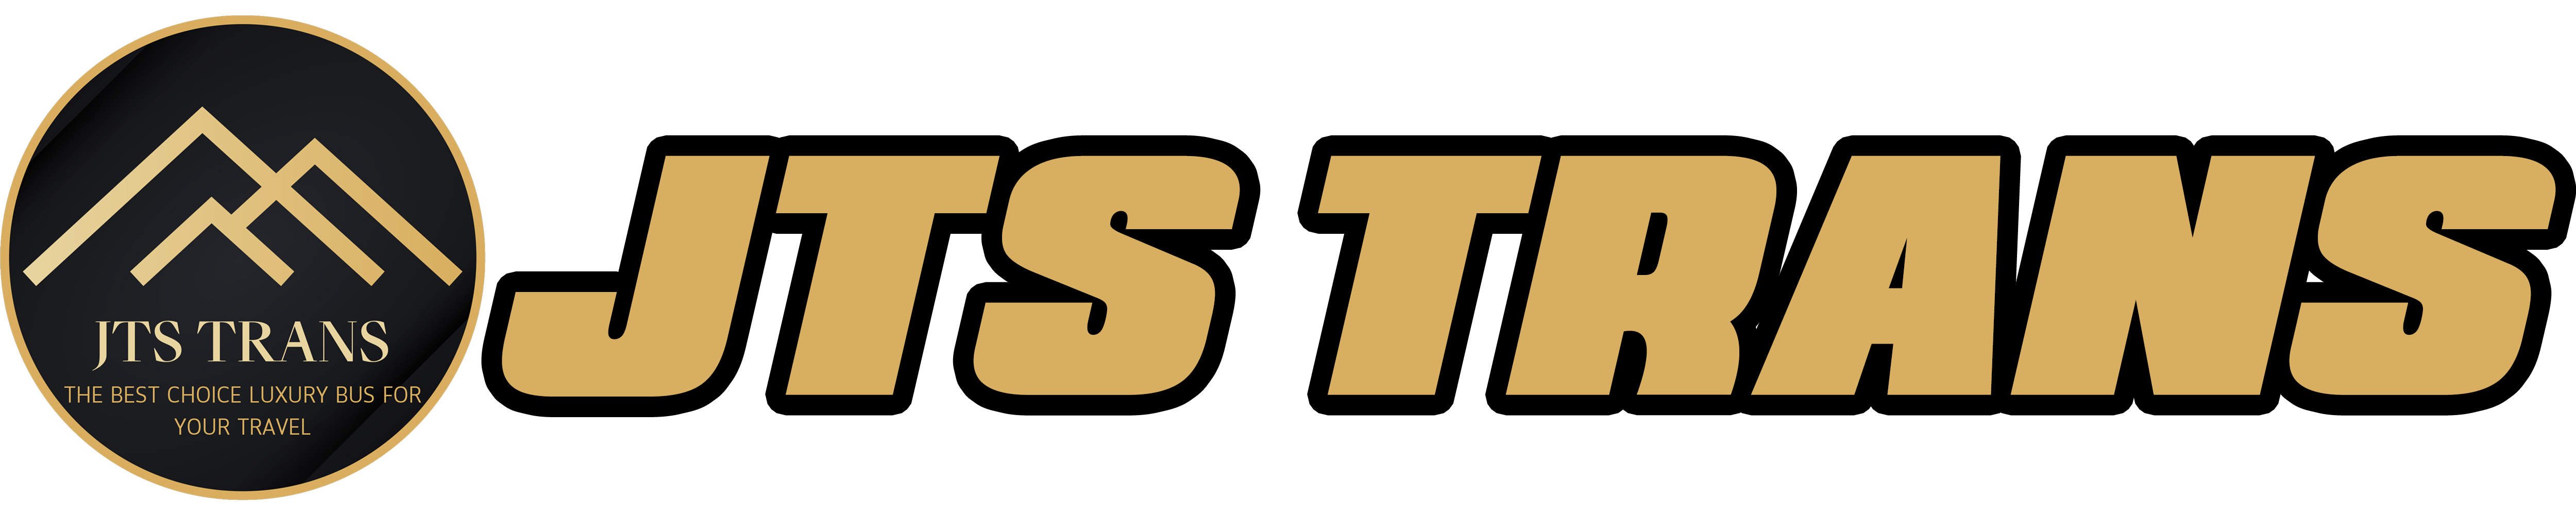 jts-trans-logo-gold.png